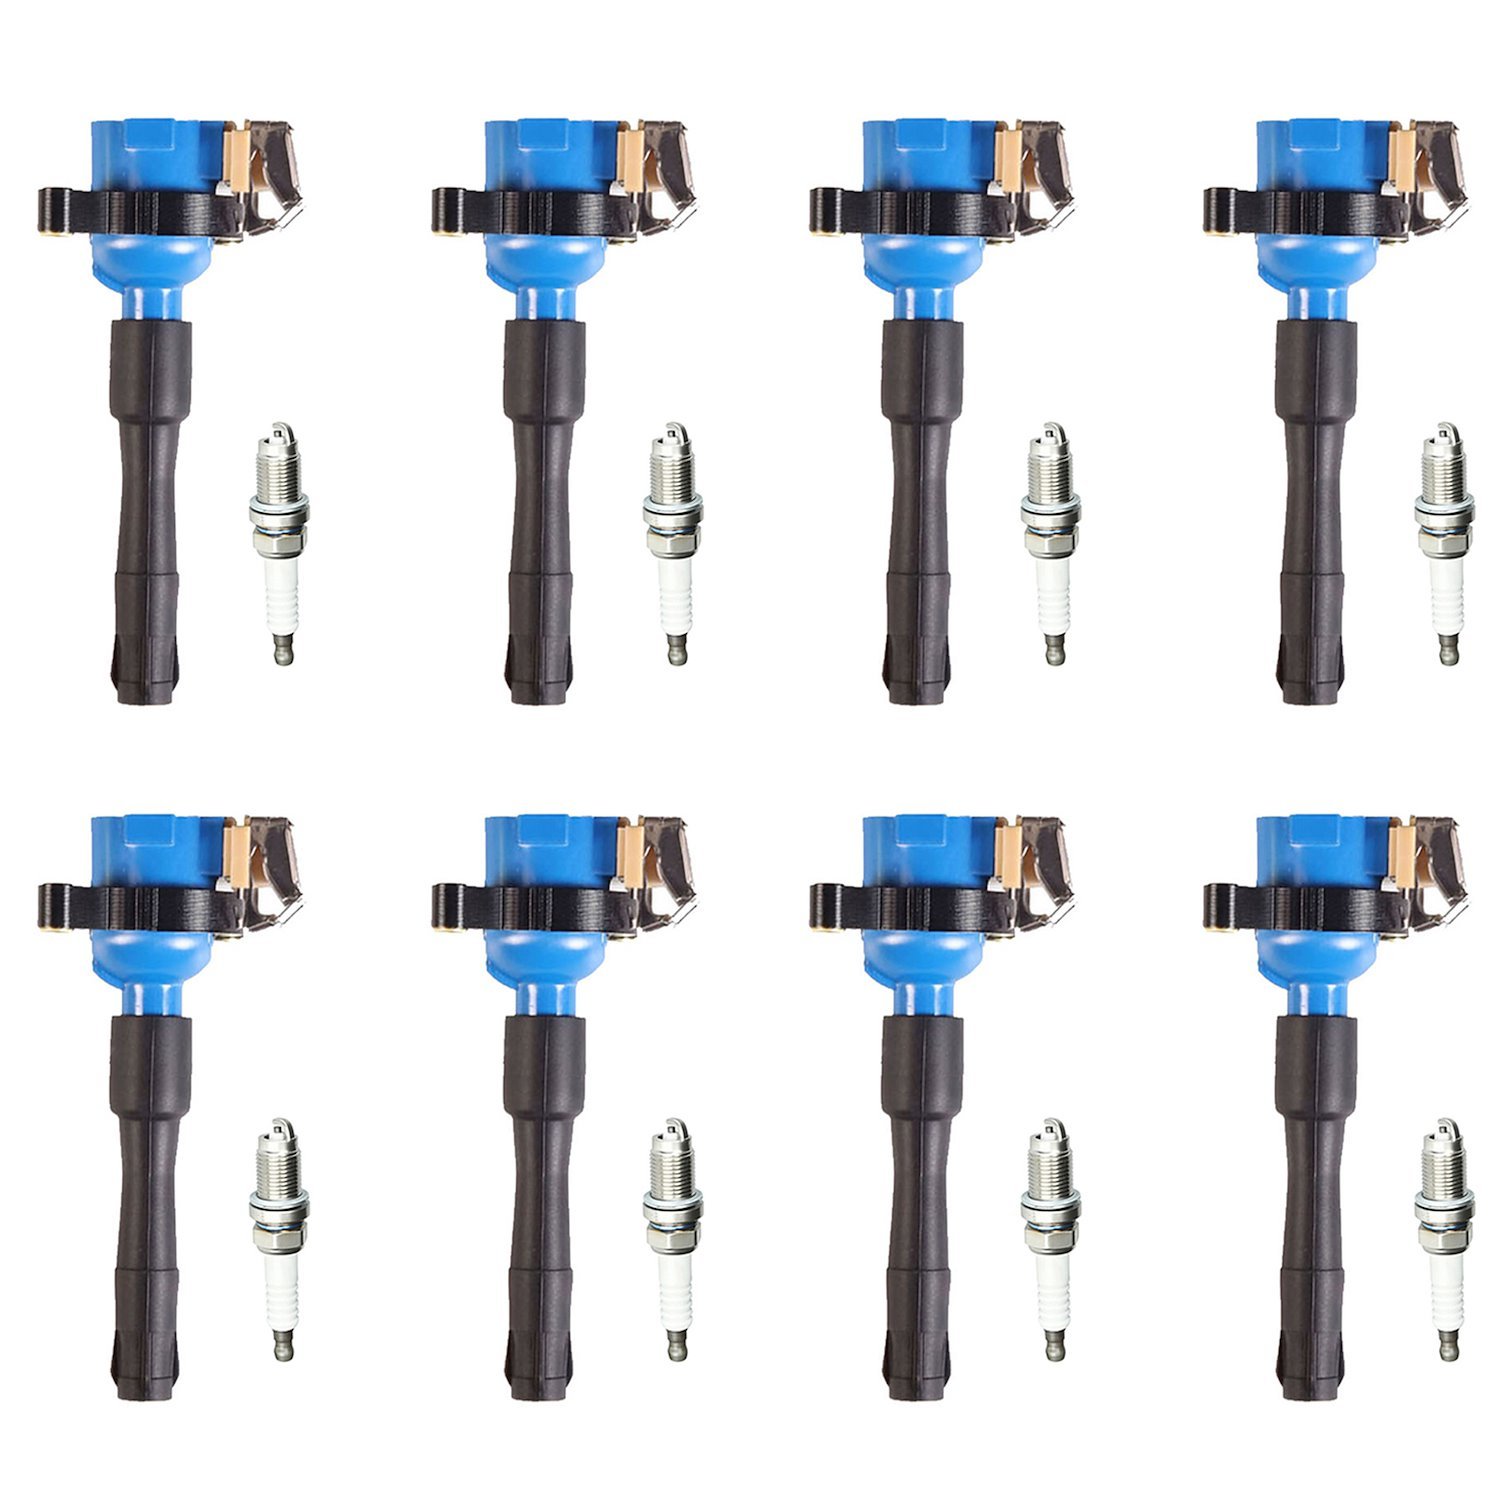 High-Performance Ignition Coil and Spark Plug Kit for BMW 325i/323i 2.5L, BMW 740iL/X5/540i 4.4L, BMW 330i 530i